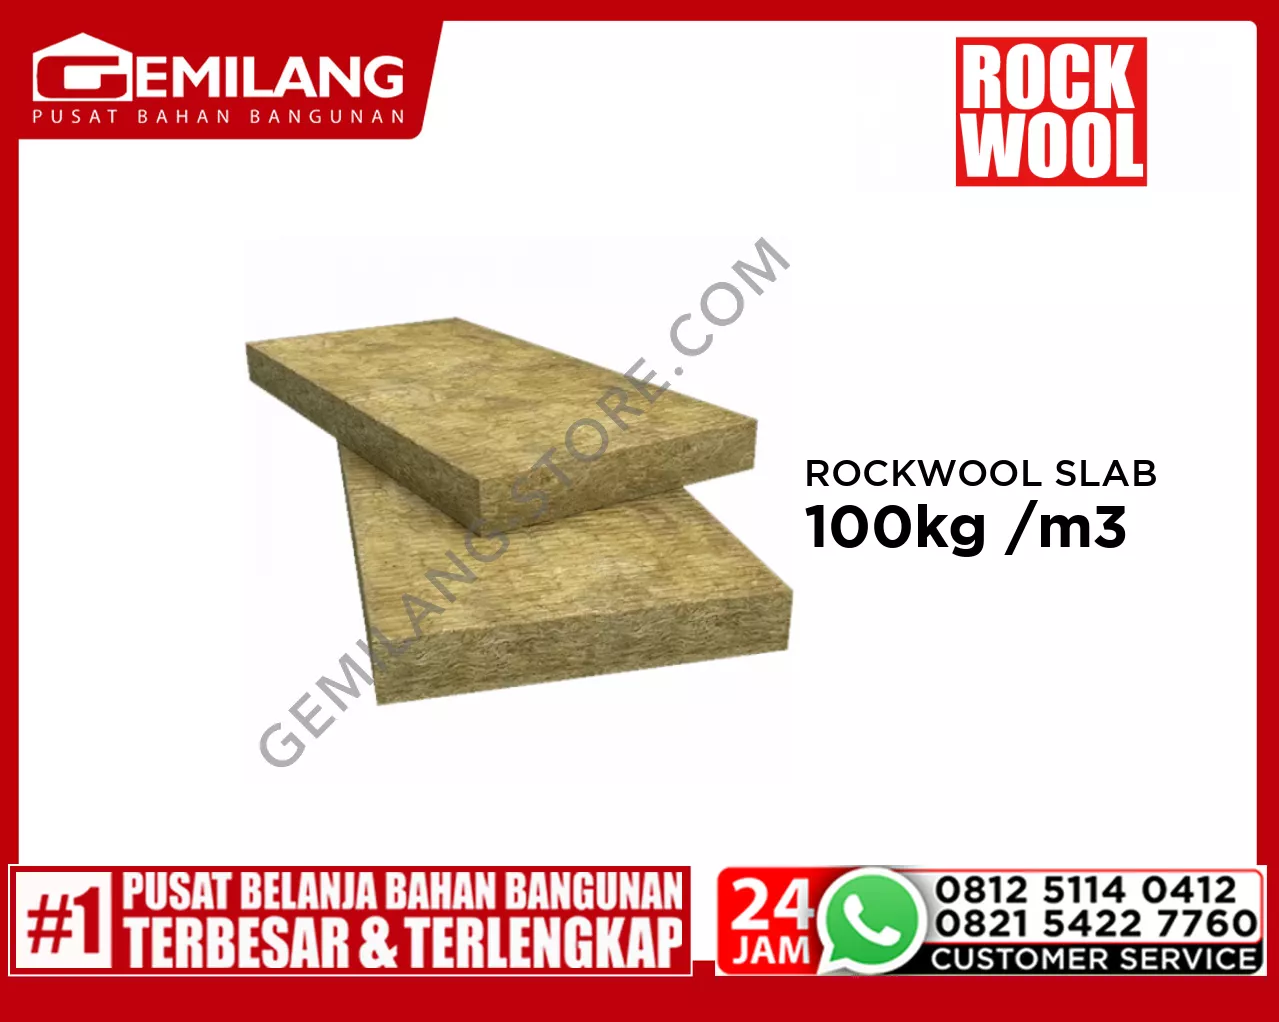 ROCKWOOL SLAB 50 x 600 x 1200mm 100kg /m3